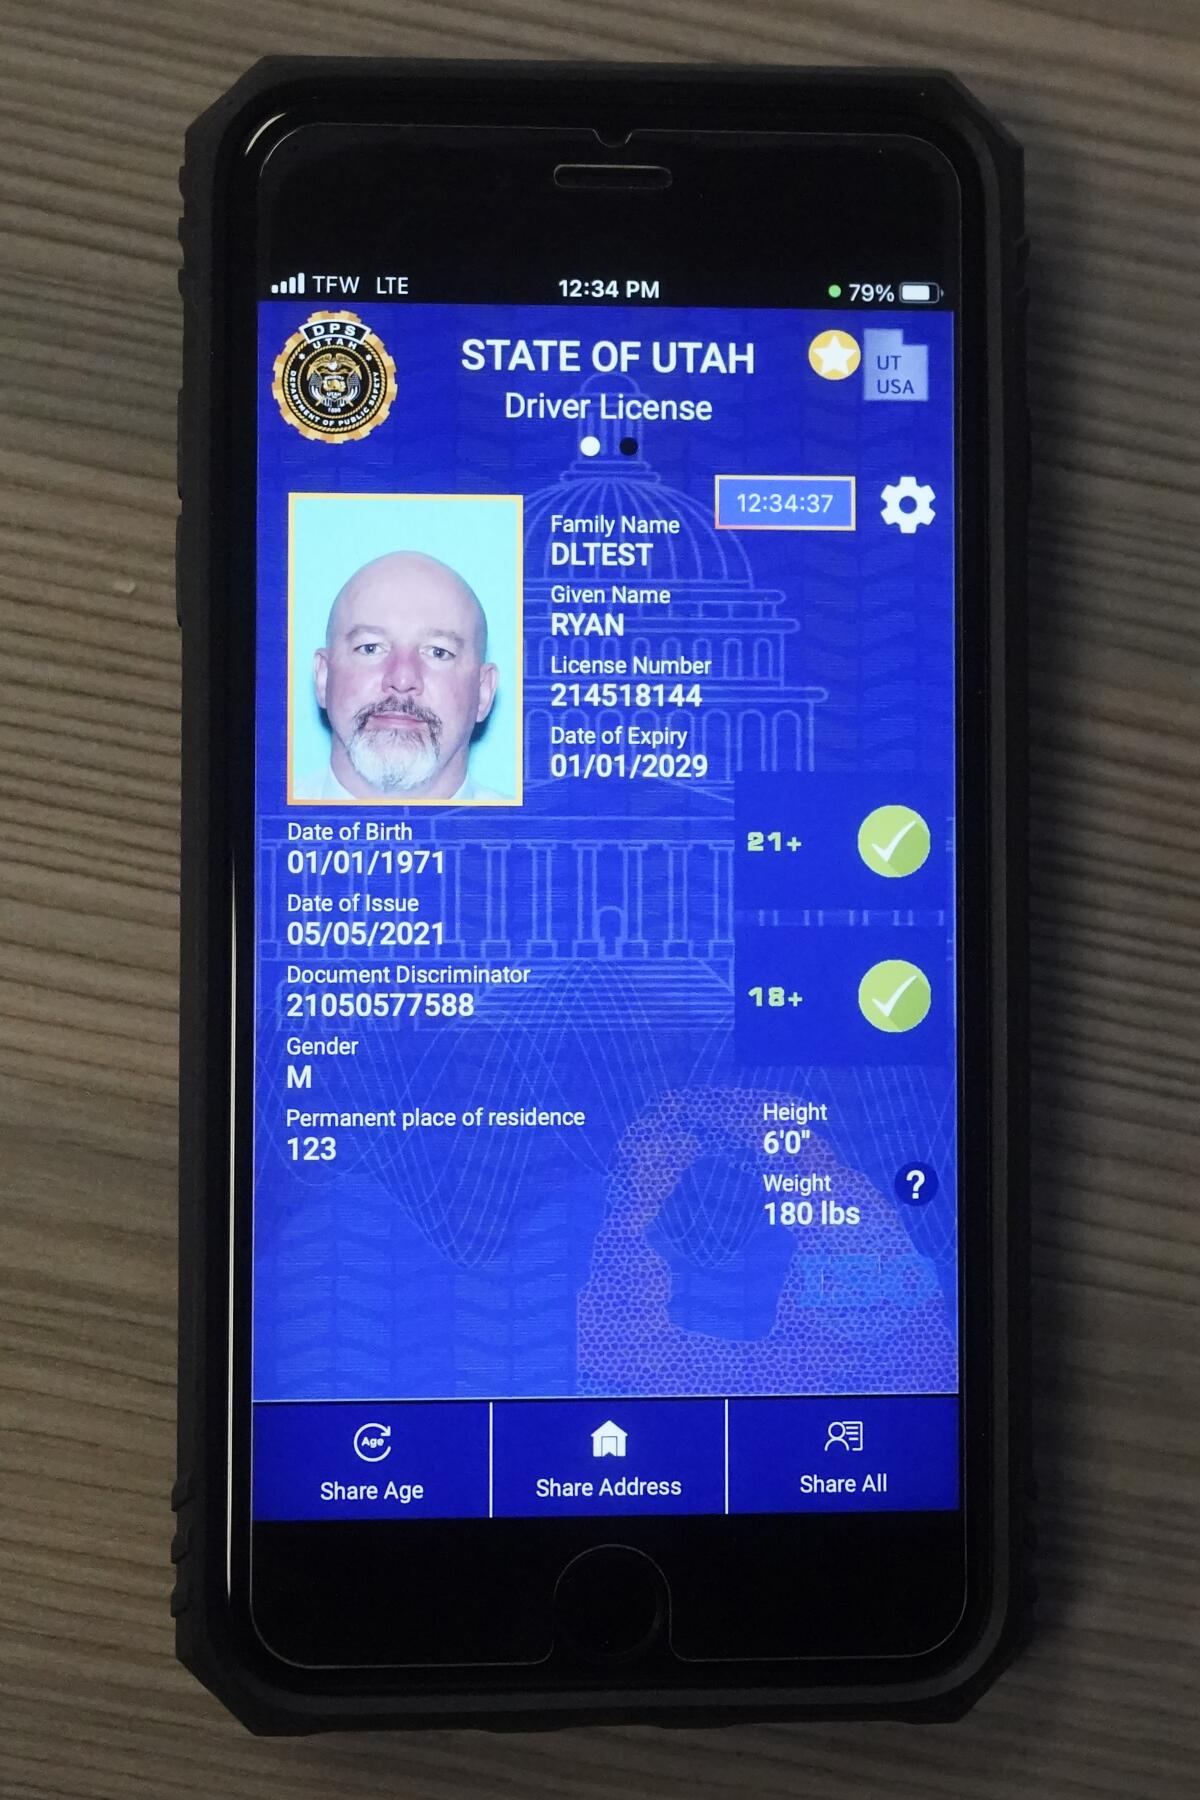 Louisiana digital driver's license app free through May